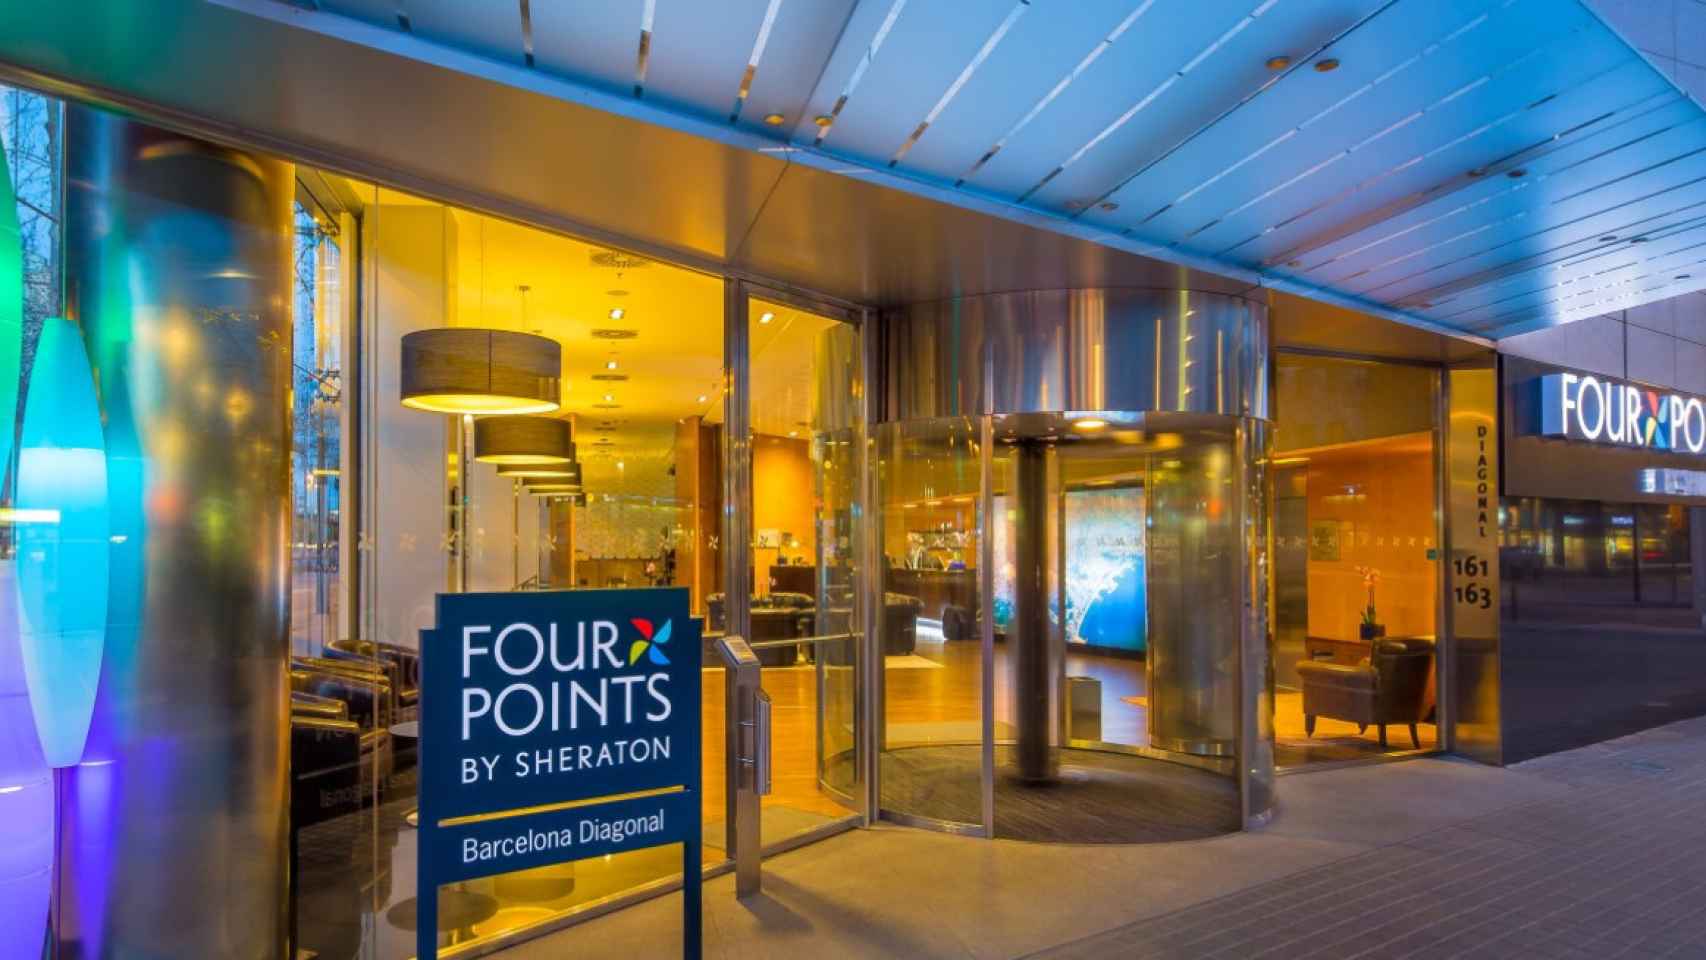 Entrada del hotel Four Point by Sheraton, del grupo de Enric Reyna, en Barcelona